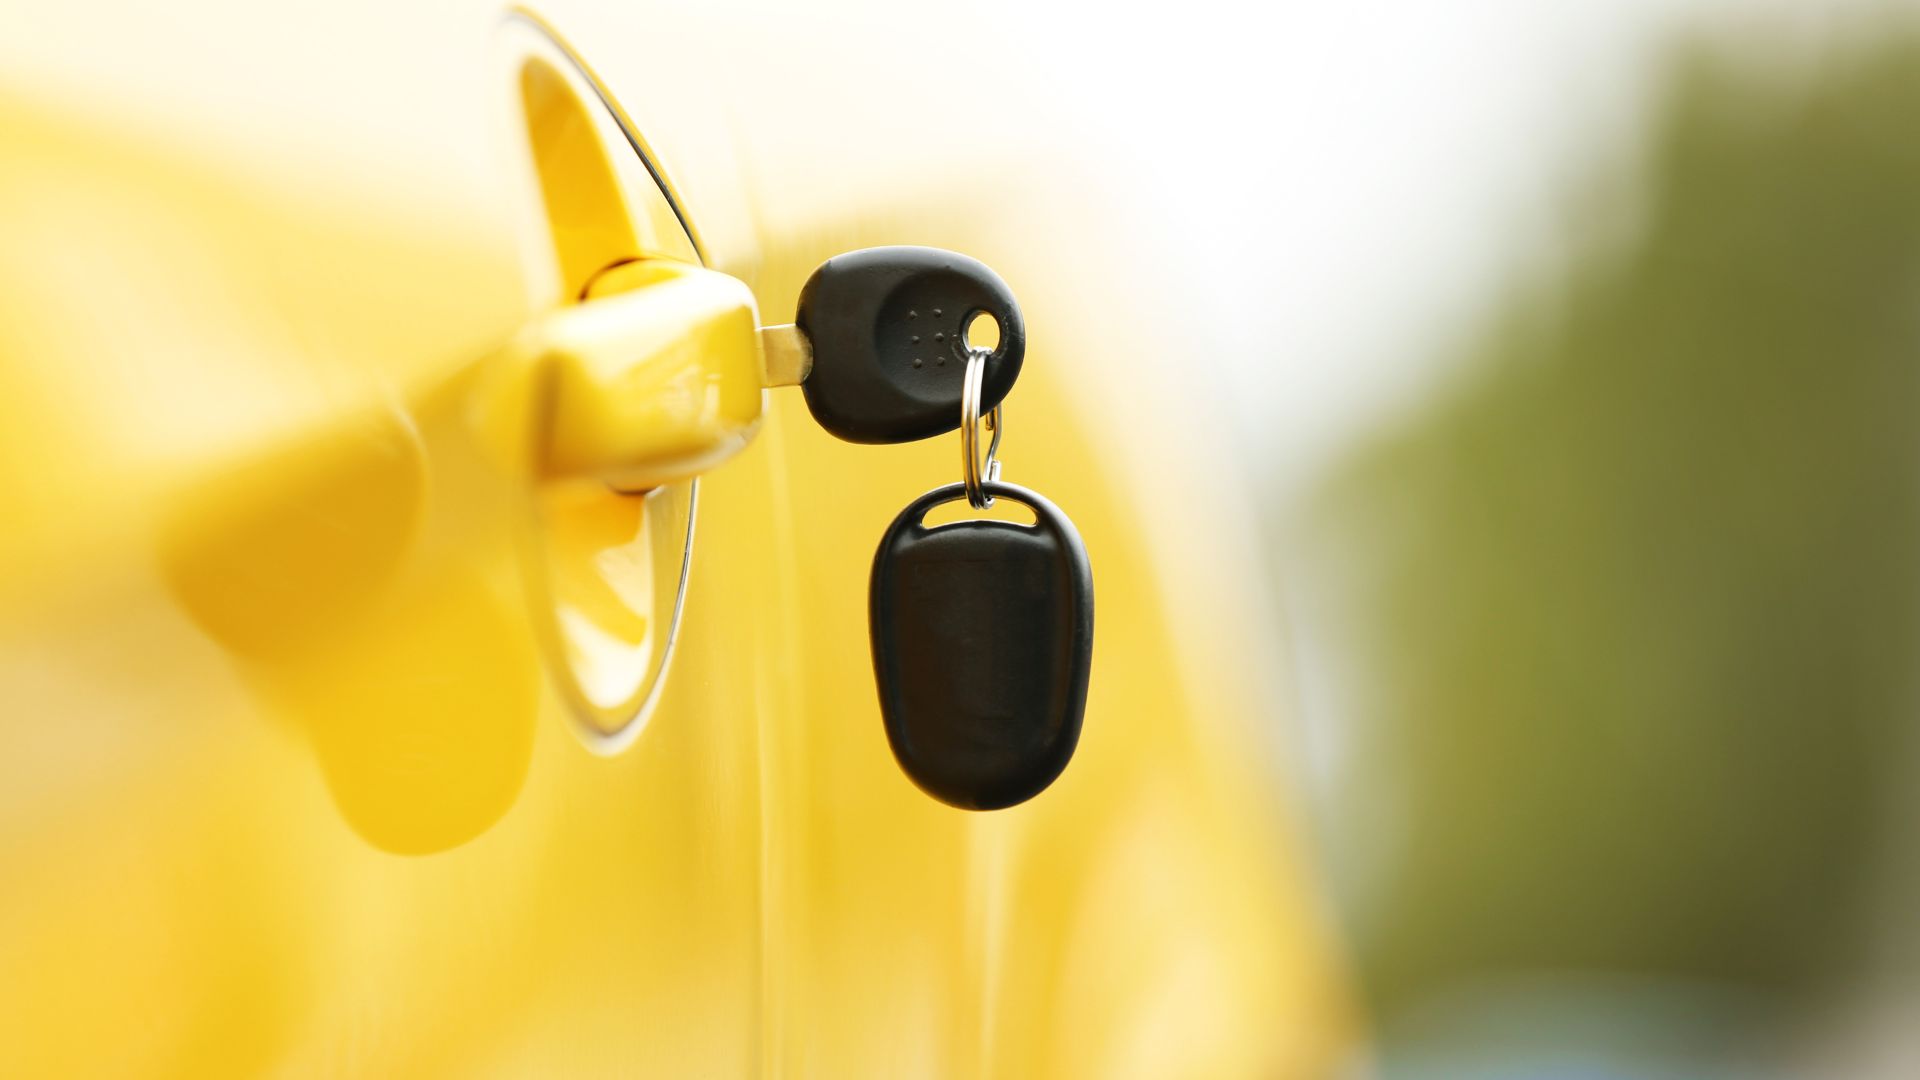 keys dangle from a yellow car door